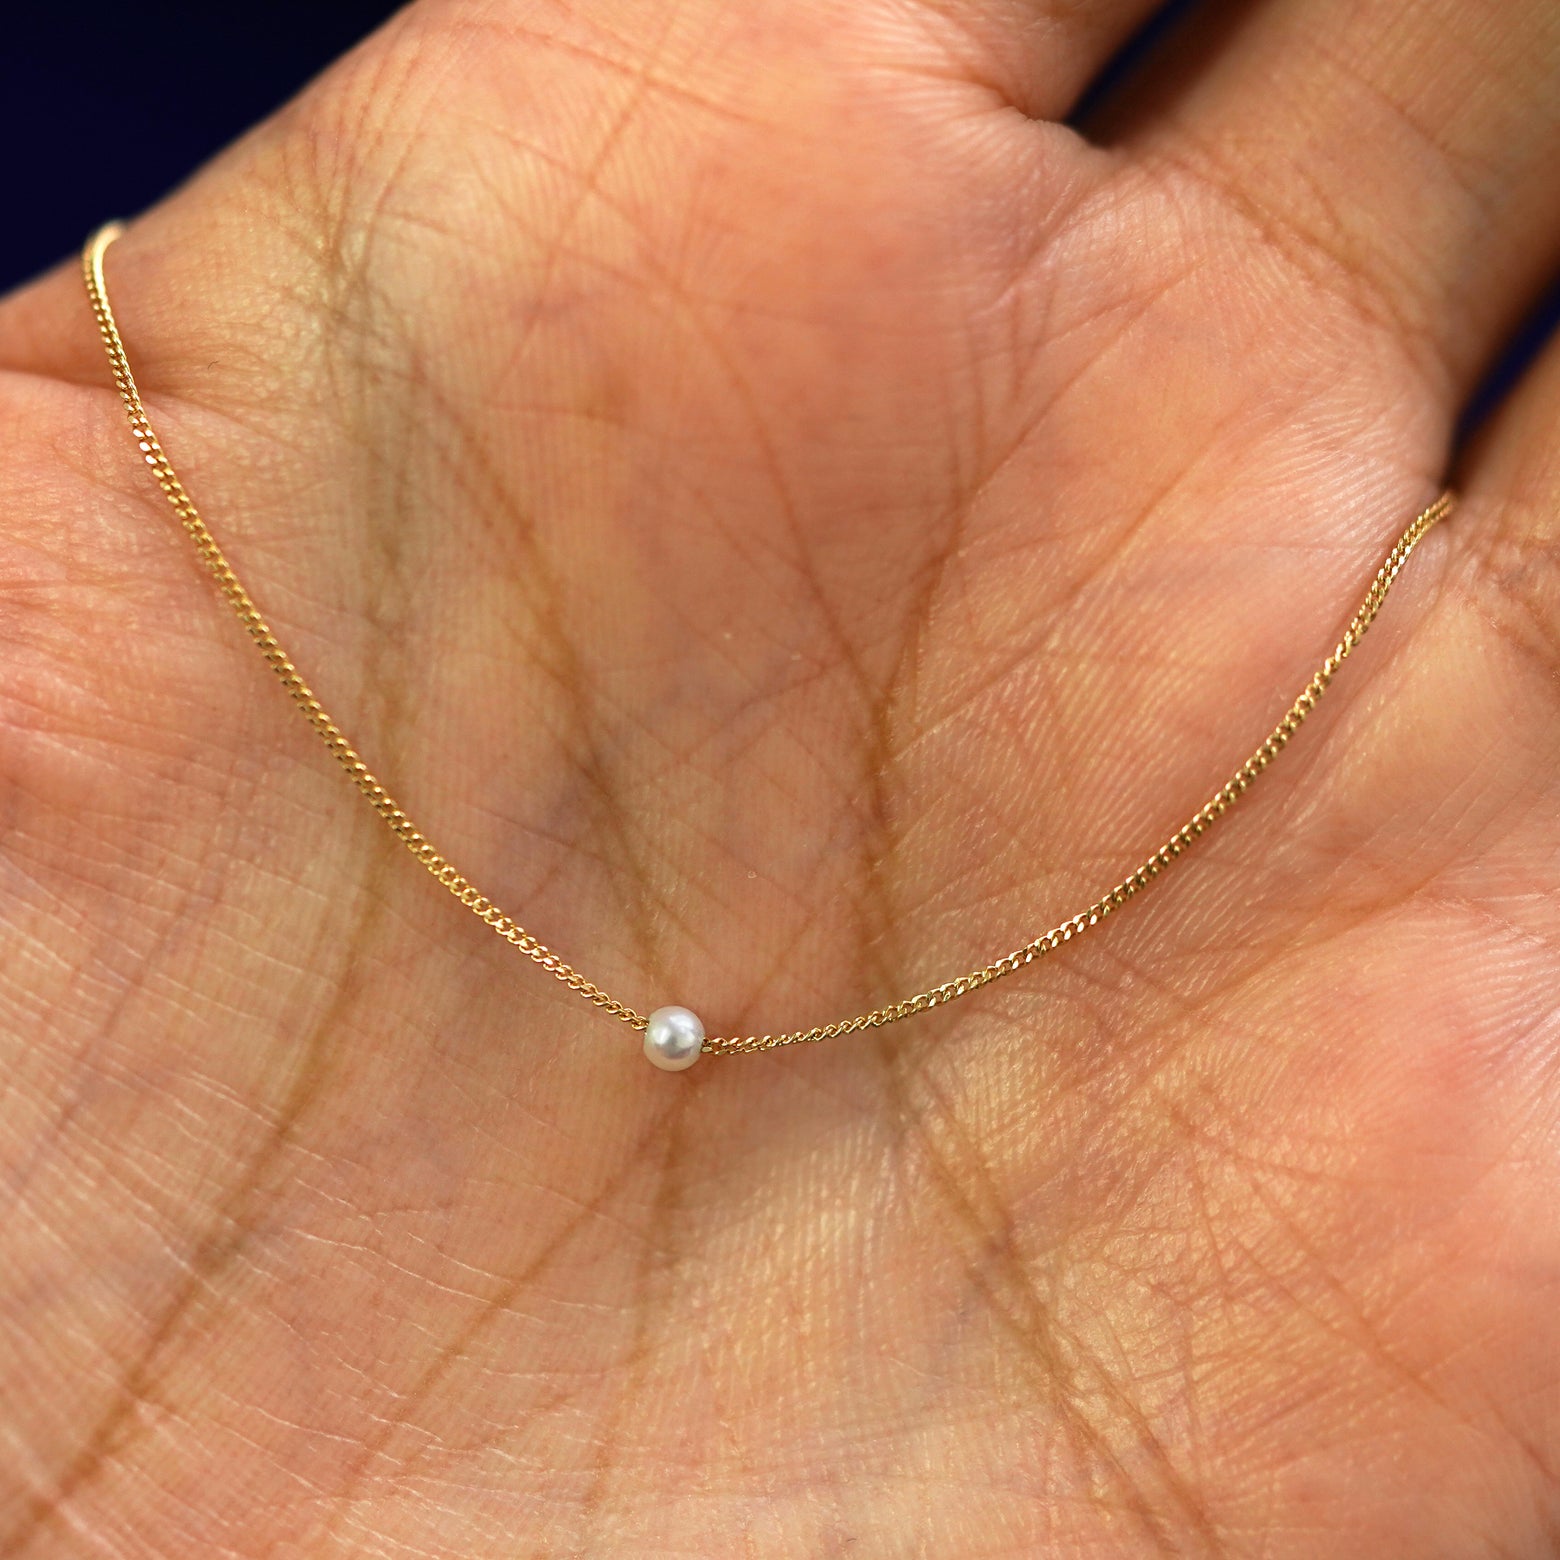 A 2mm pearl slide bracelet draped on a model's palm